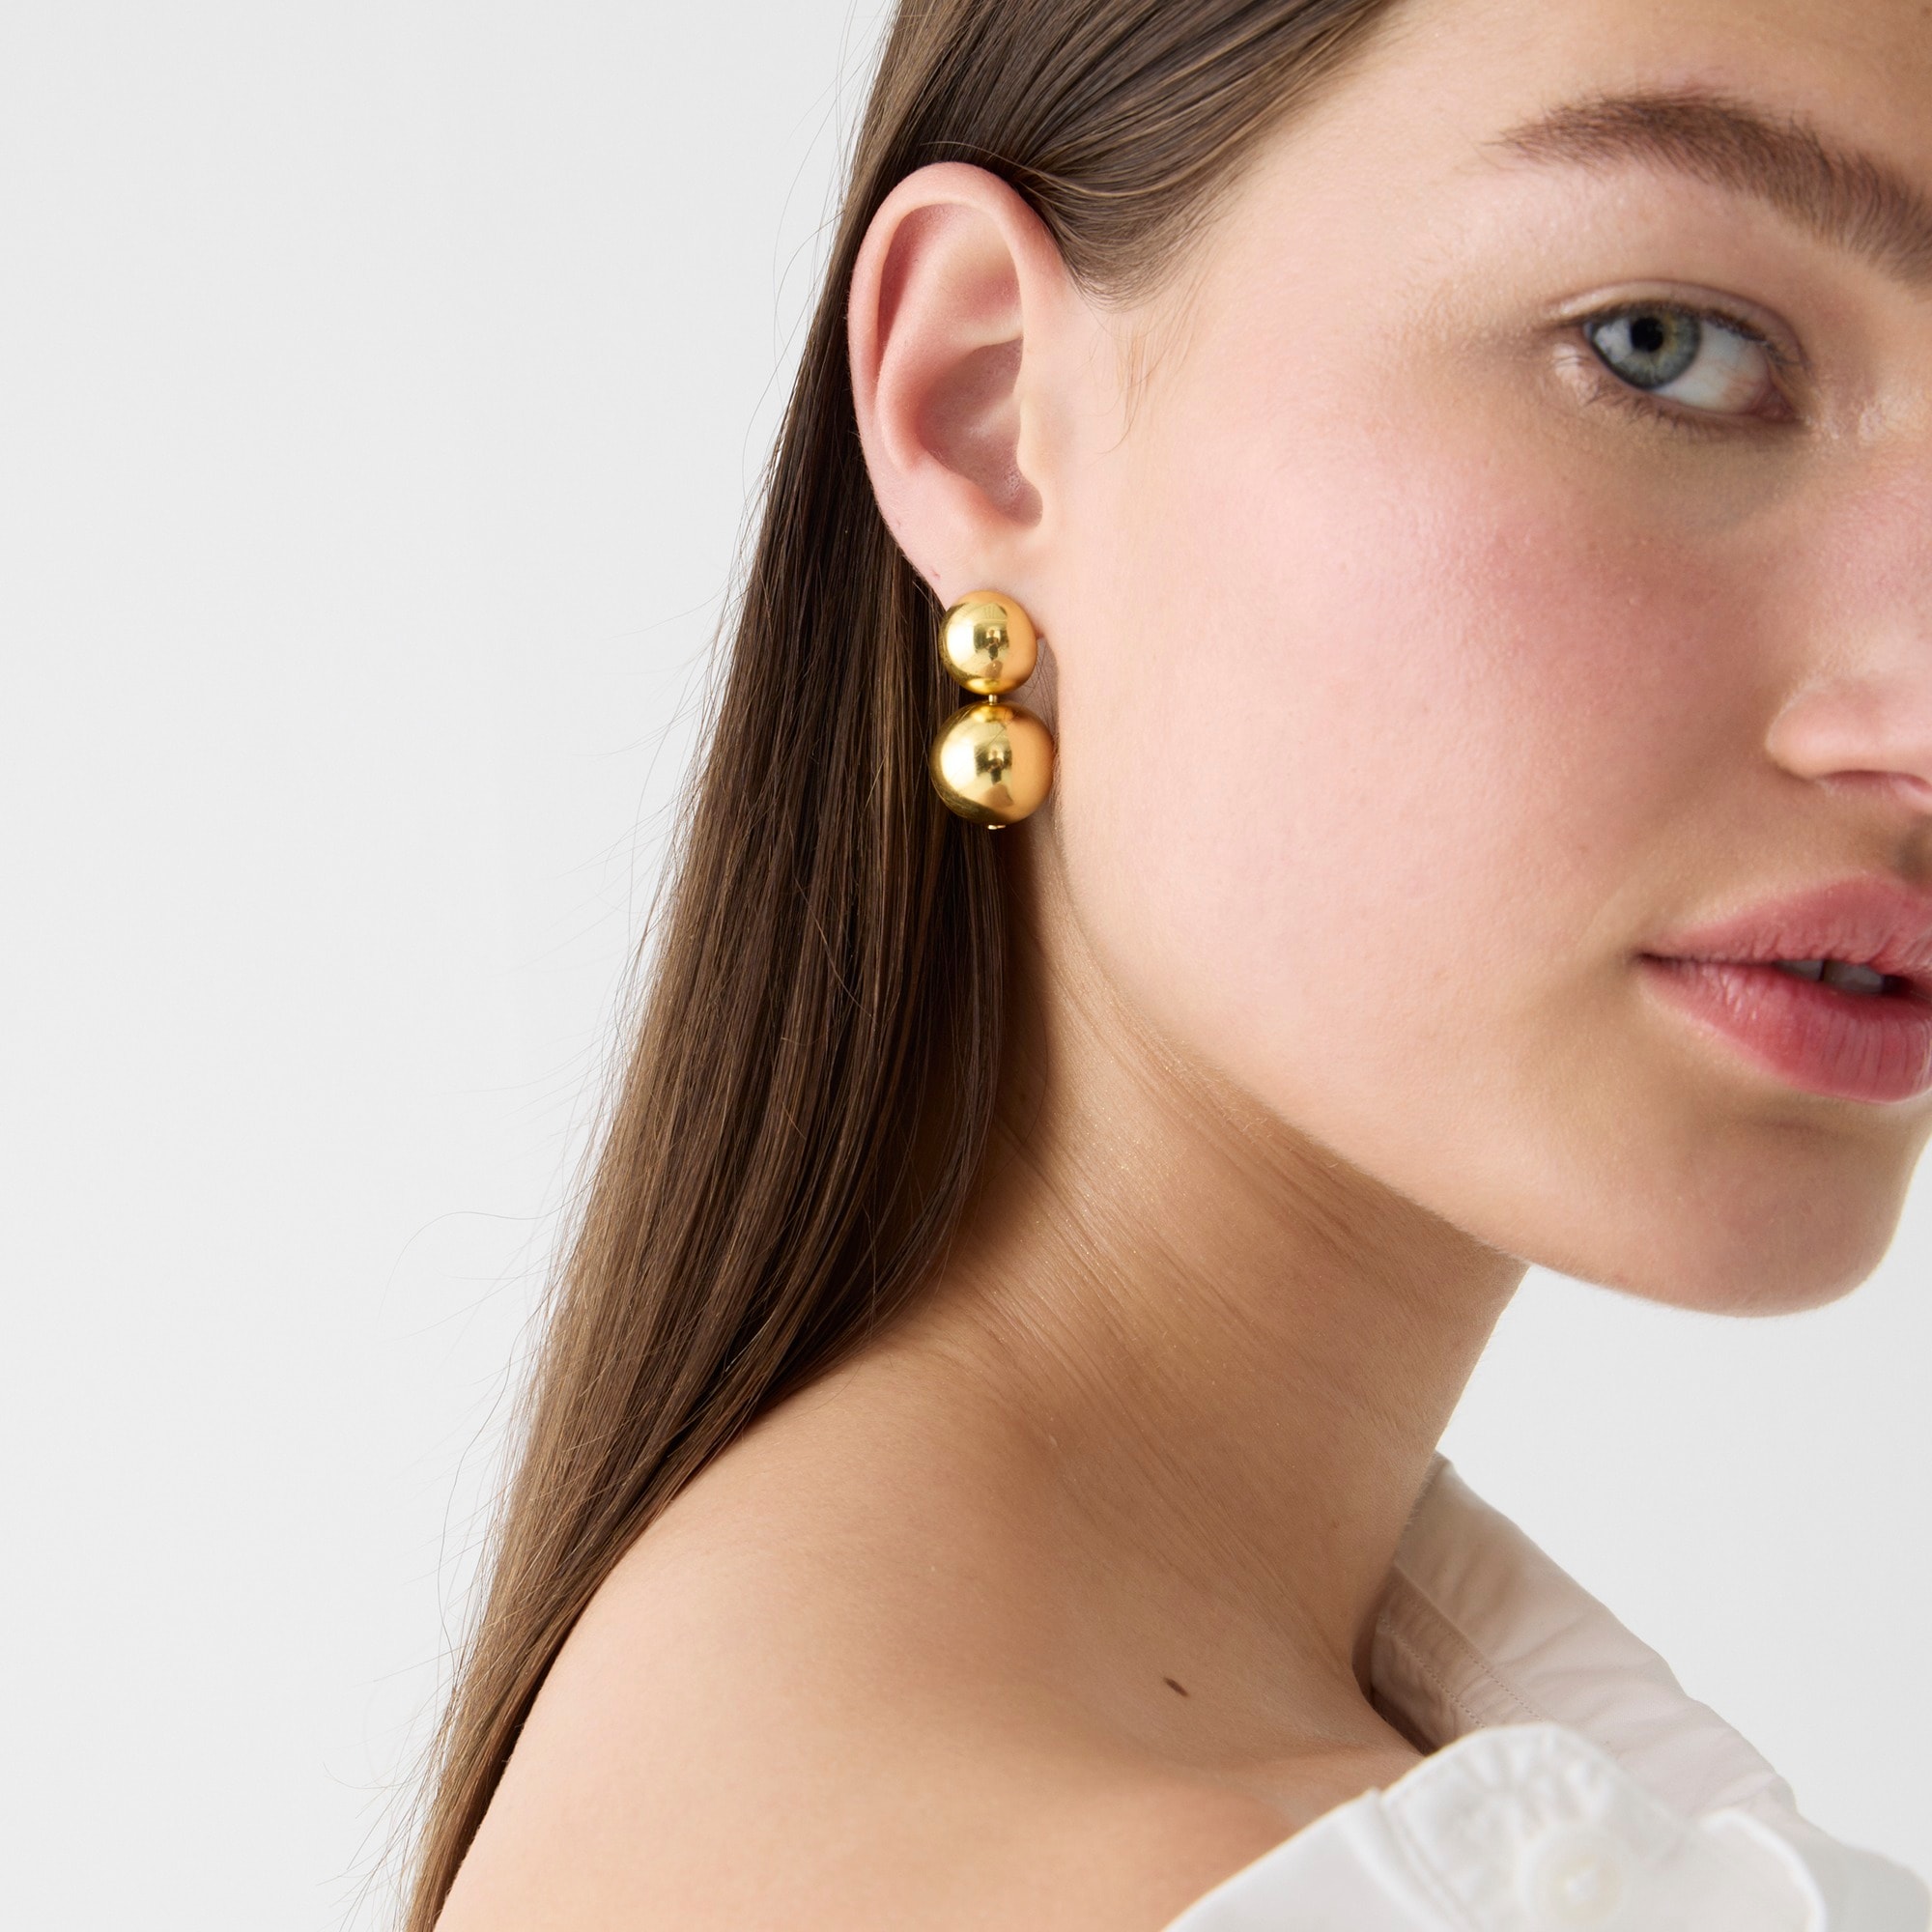  Metallic ball earrings